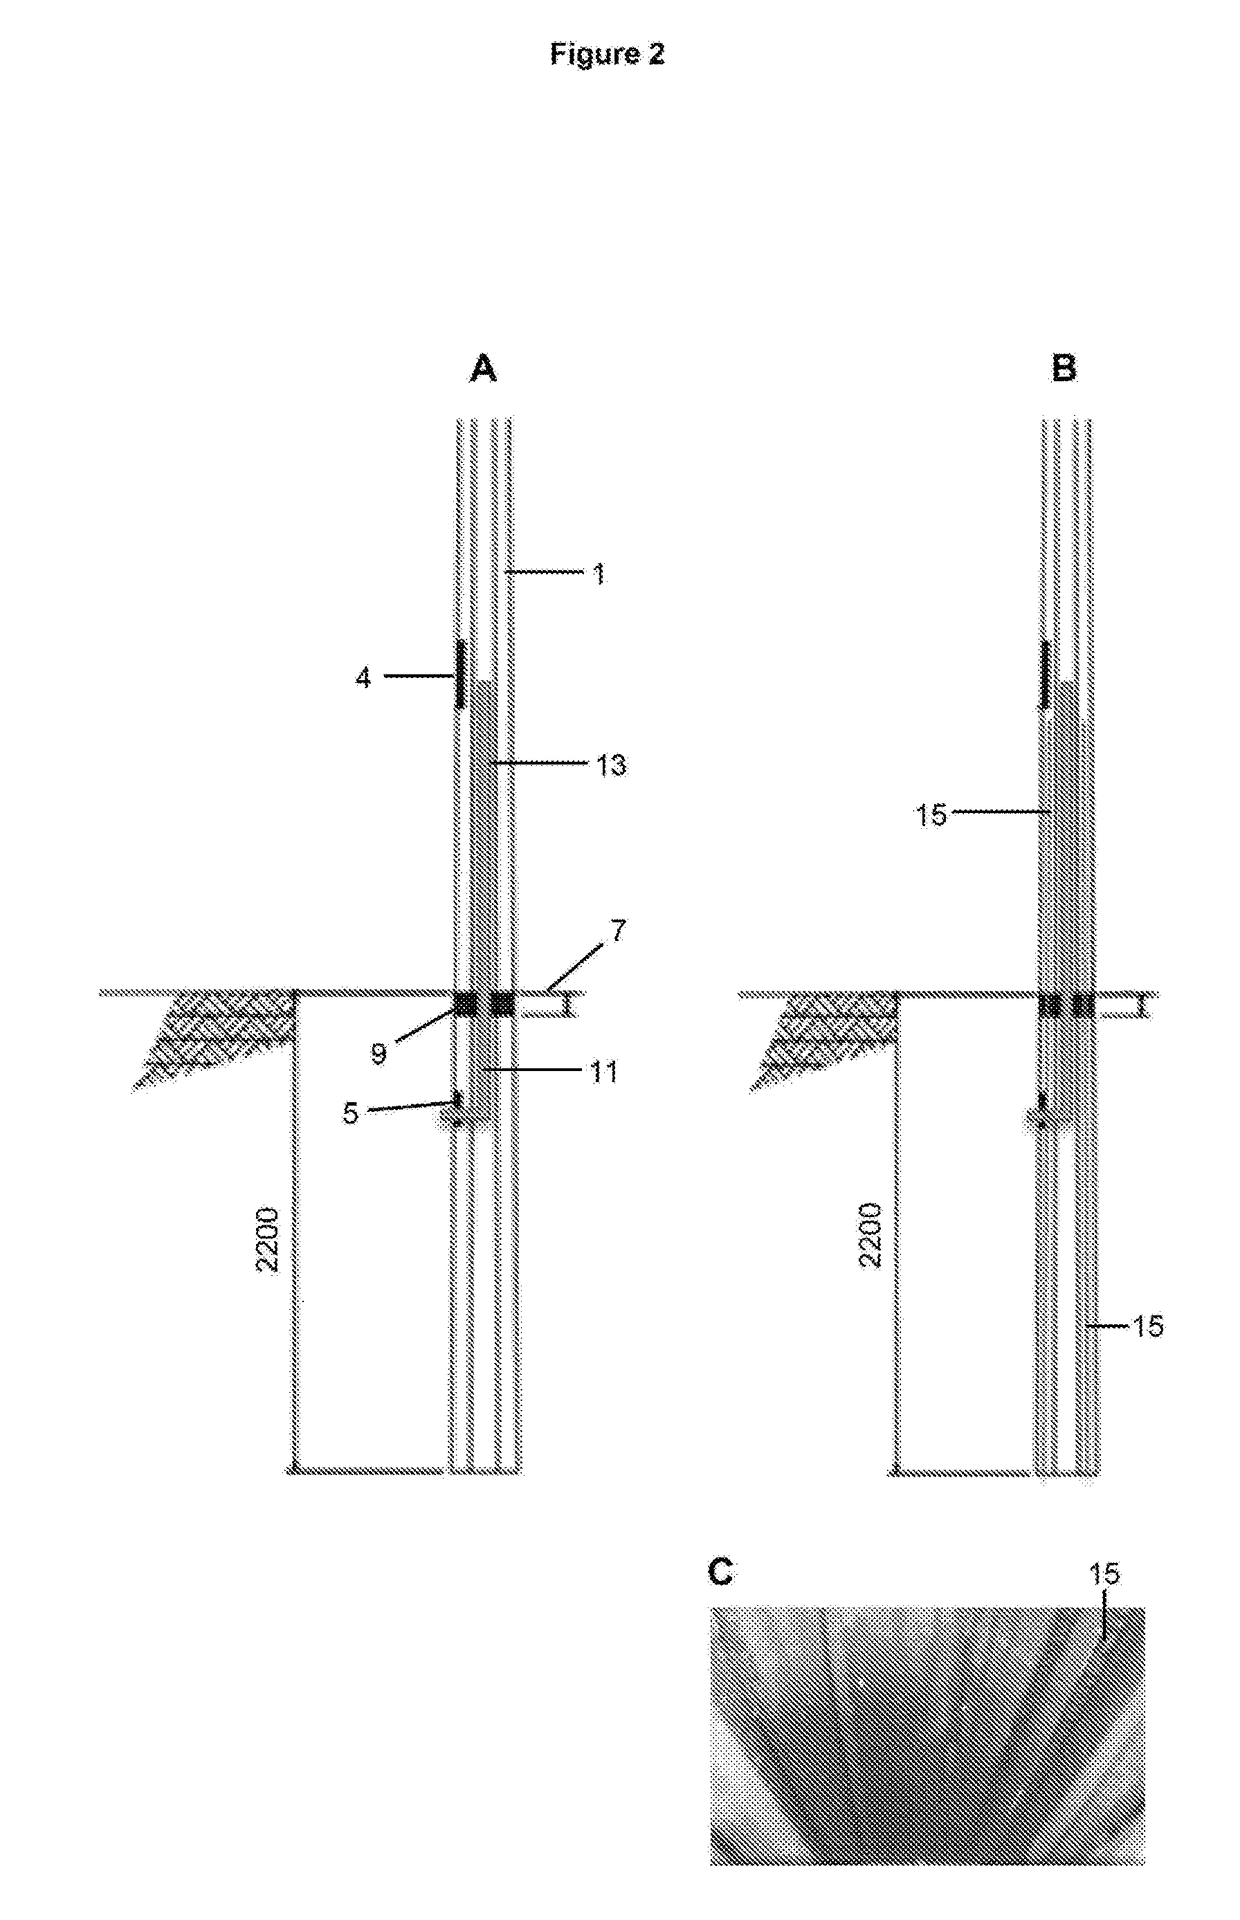 Planted pole reinforcement methods